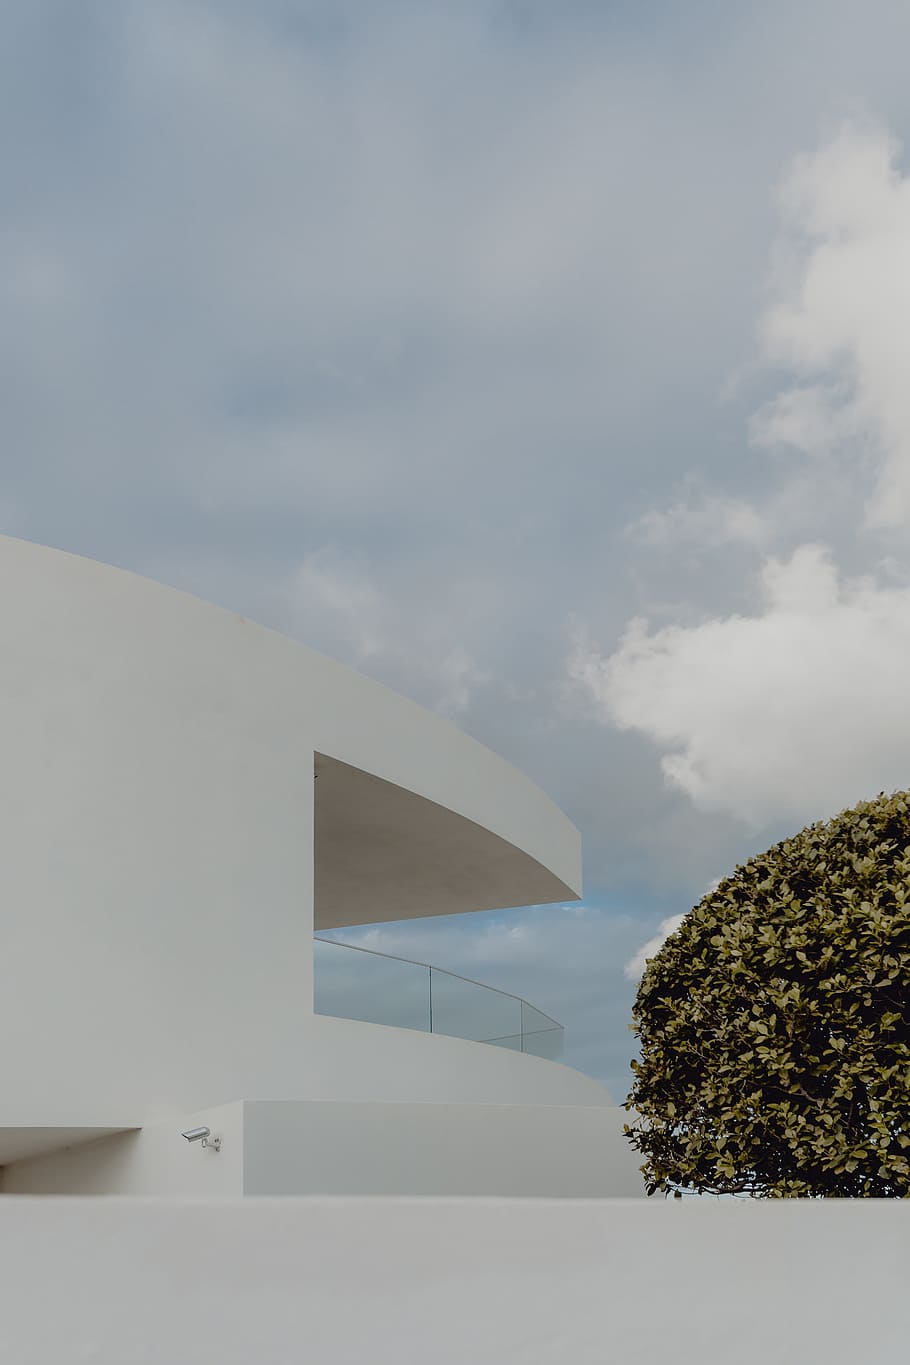 contemporary portuguese houses, architecture, design, facade, house, portugal, algarve, cloud - sky, sky, built structure